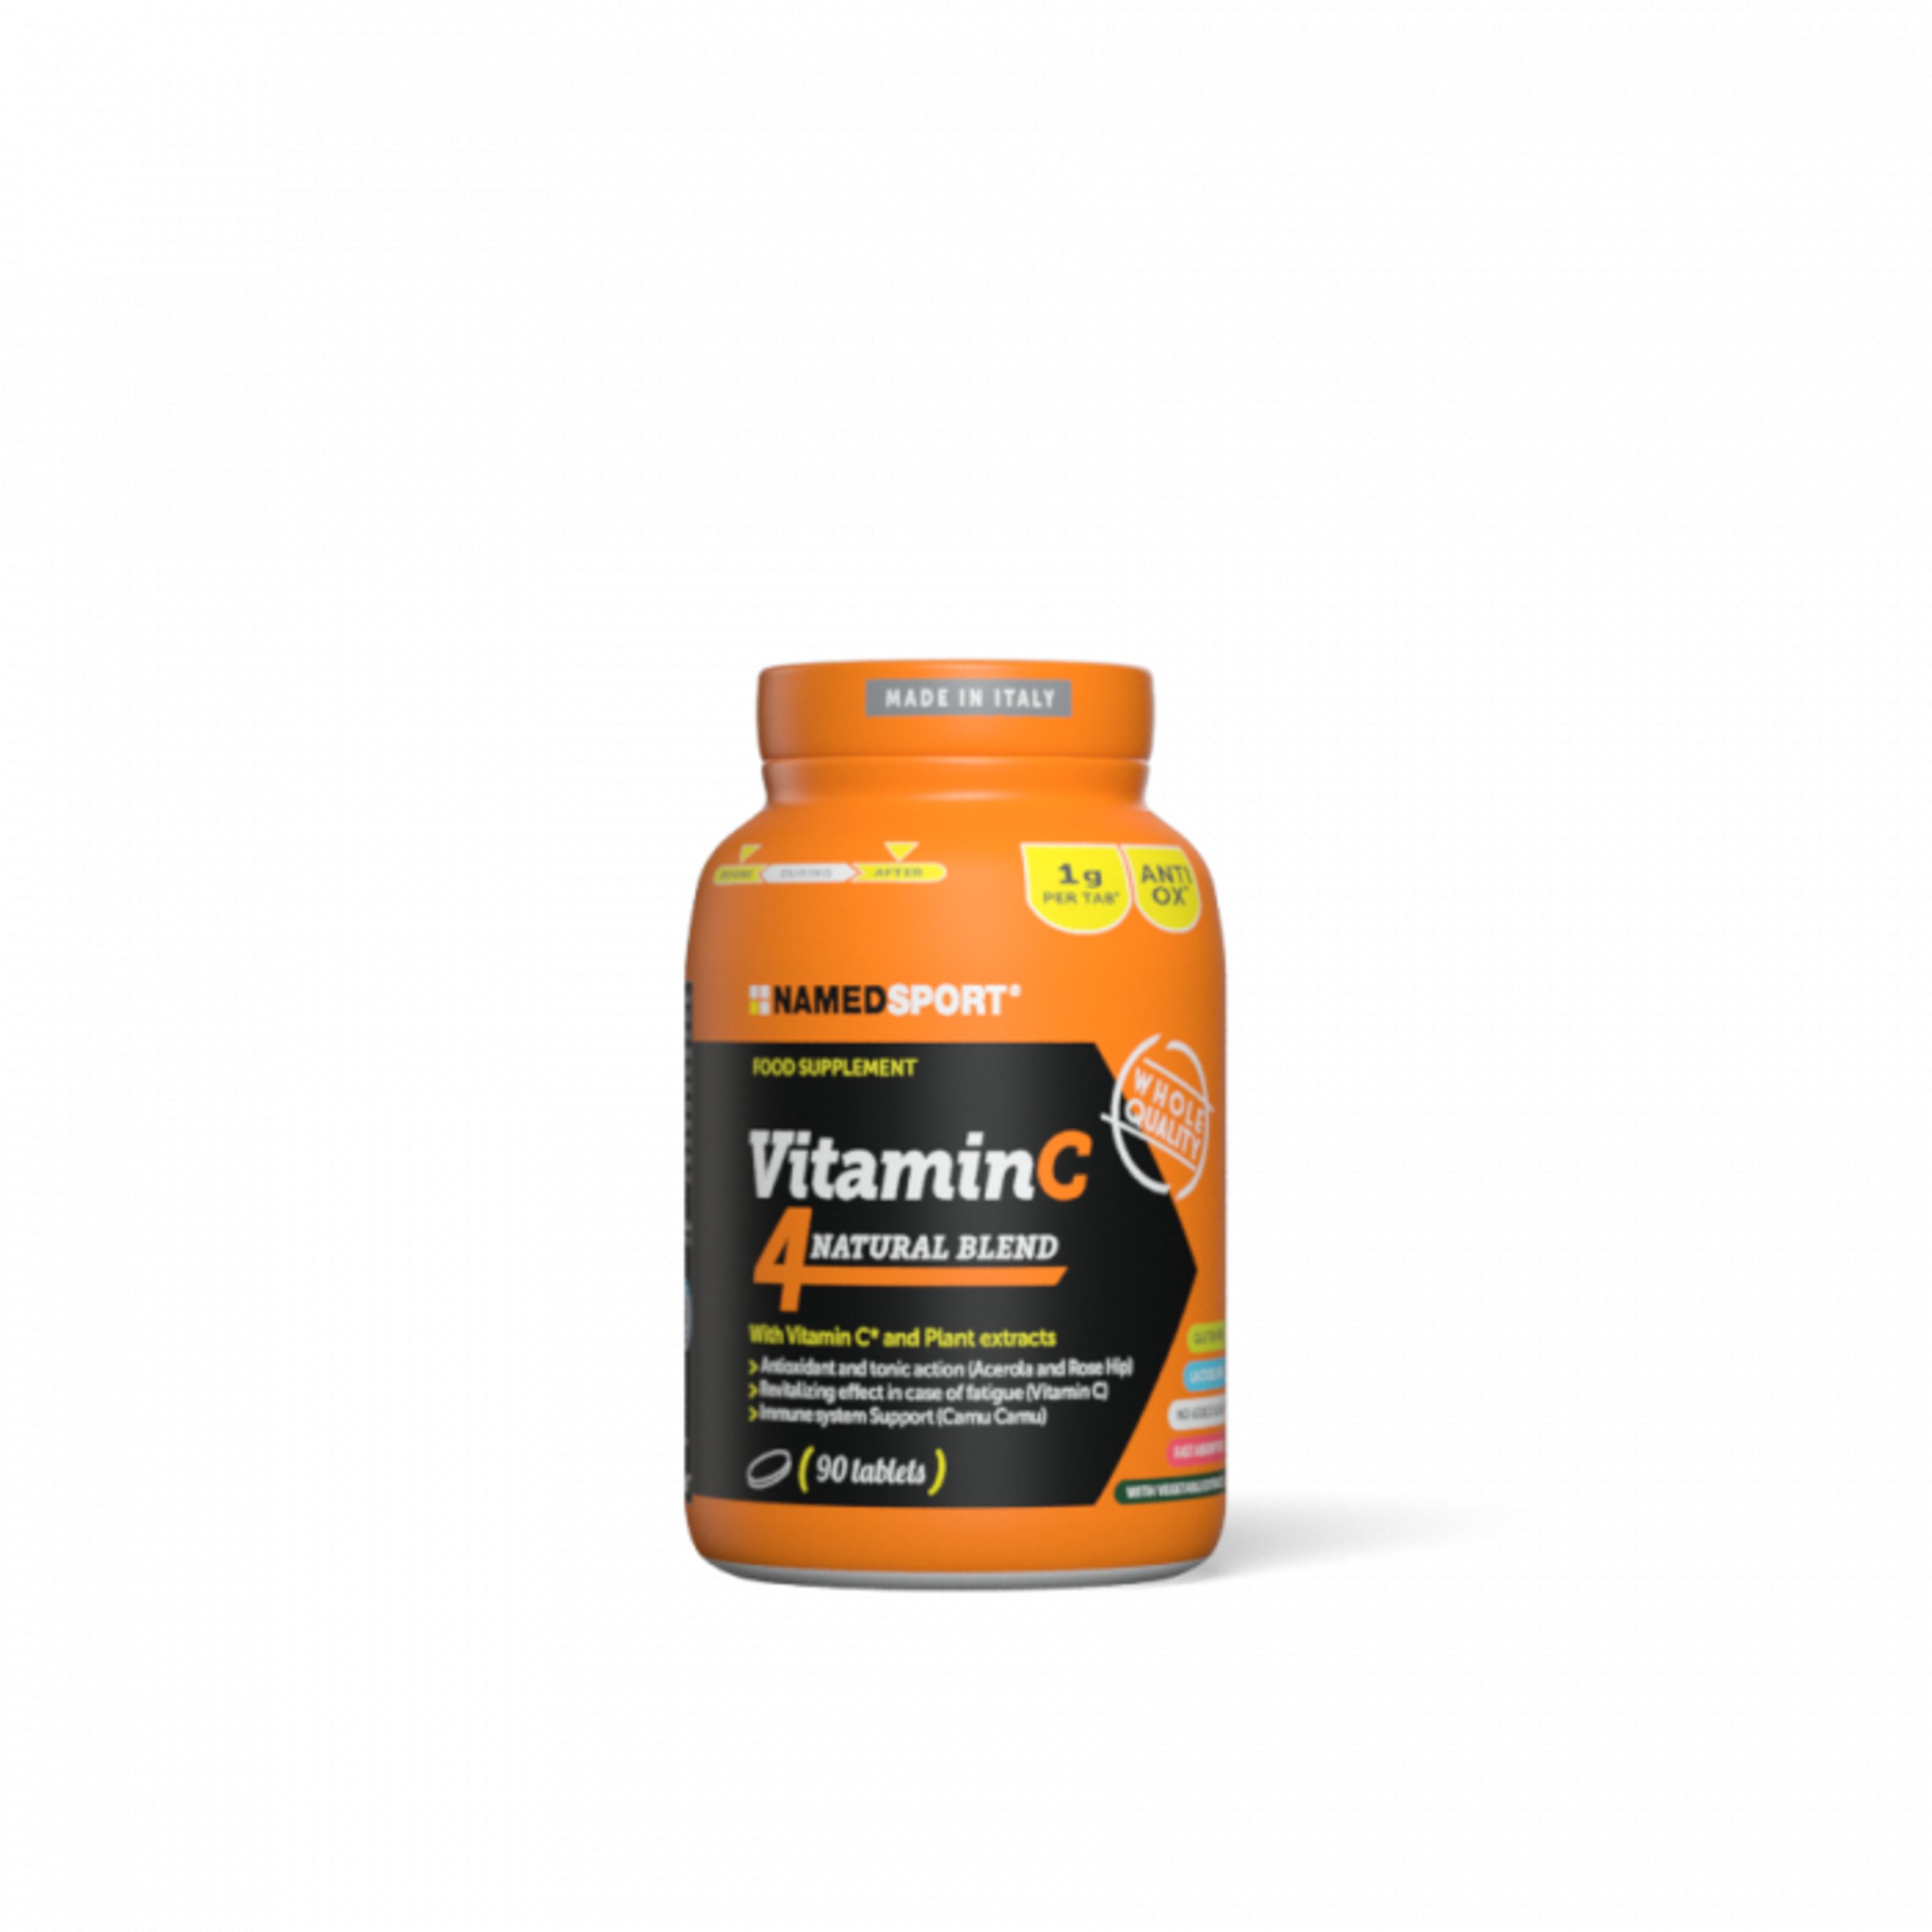 Vitamin C 4 Natural Blend - 90 Cápsulas